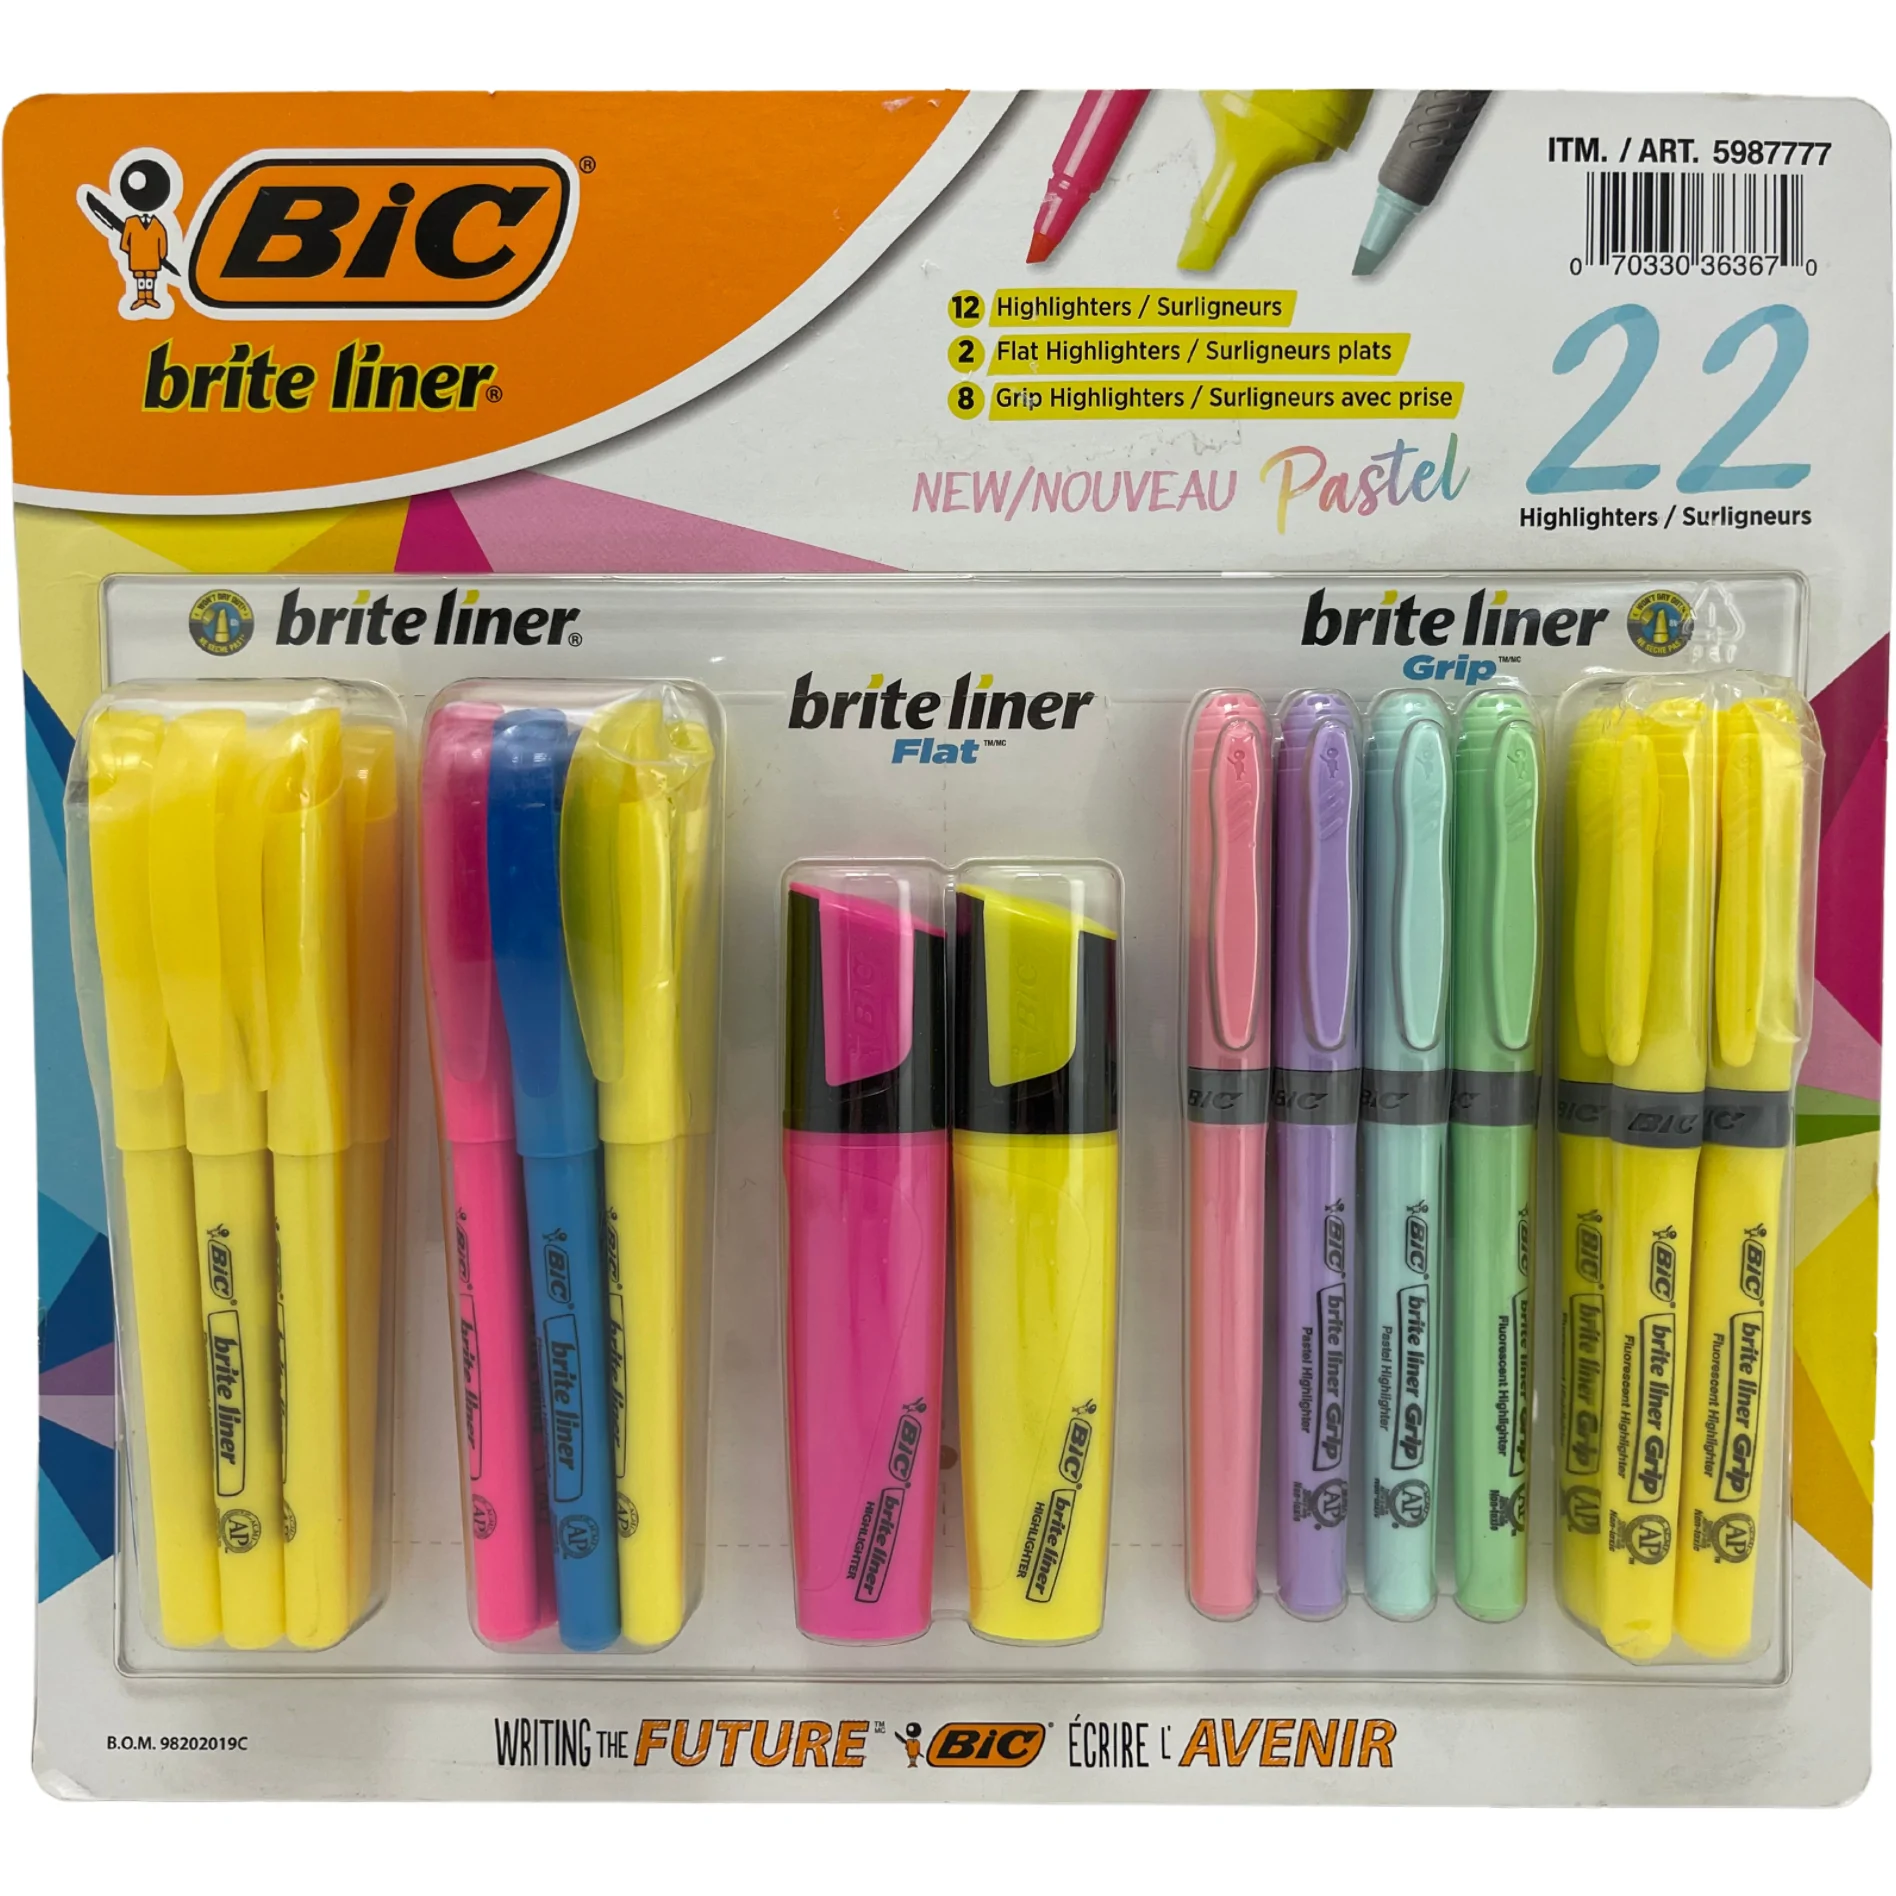 BIC Highlighter Set / Brite Liner / 22 Pack / Office Supplies / Pastels **DEALS**